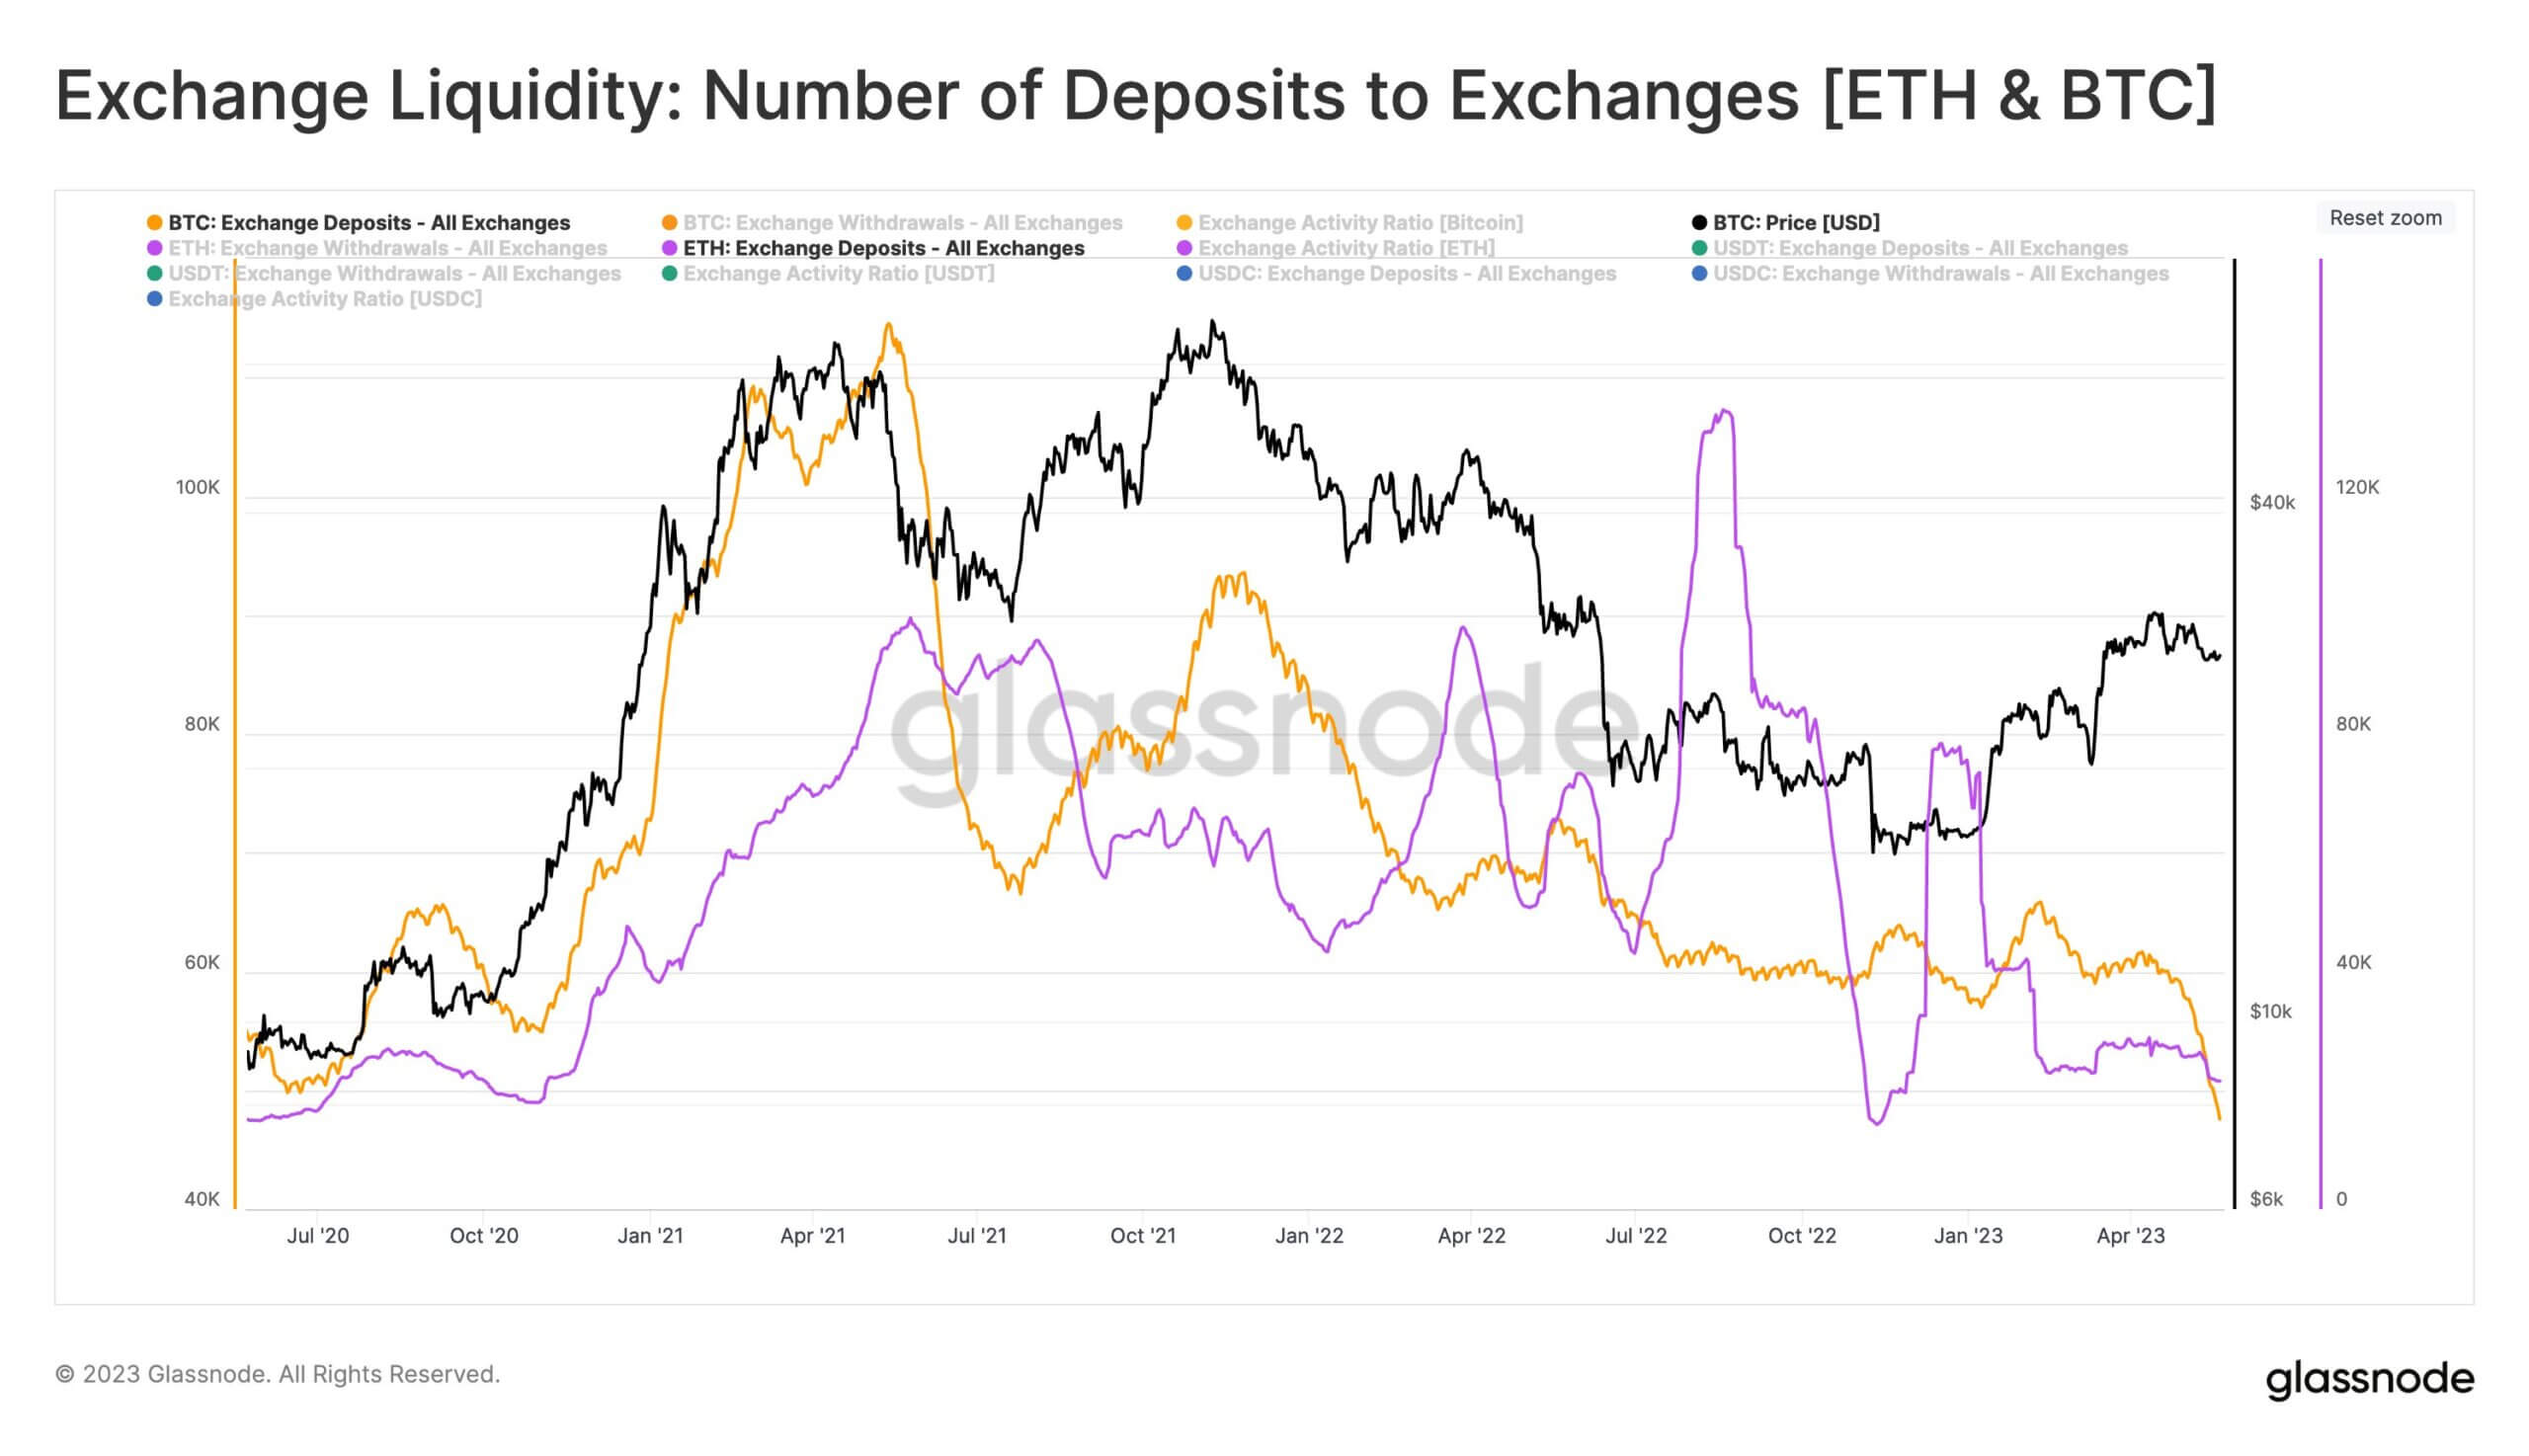 BTC & ETH Deposits: (Source: Glassnode)